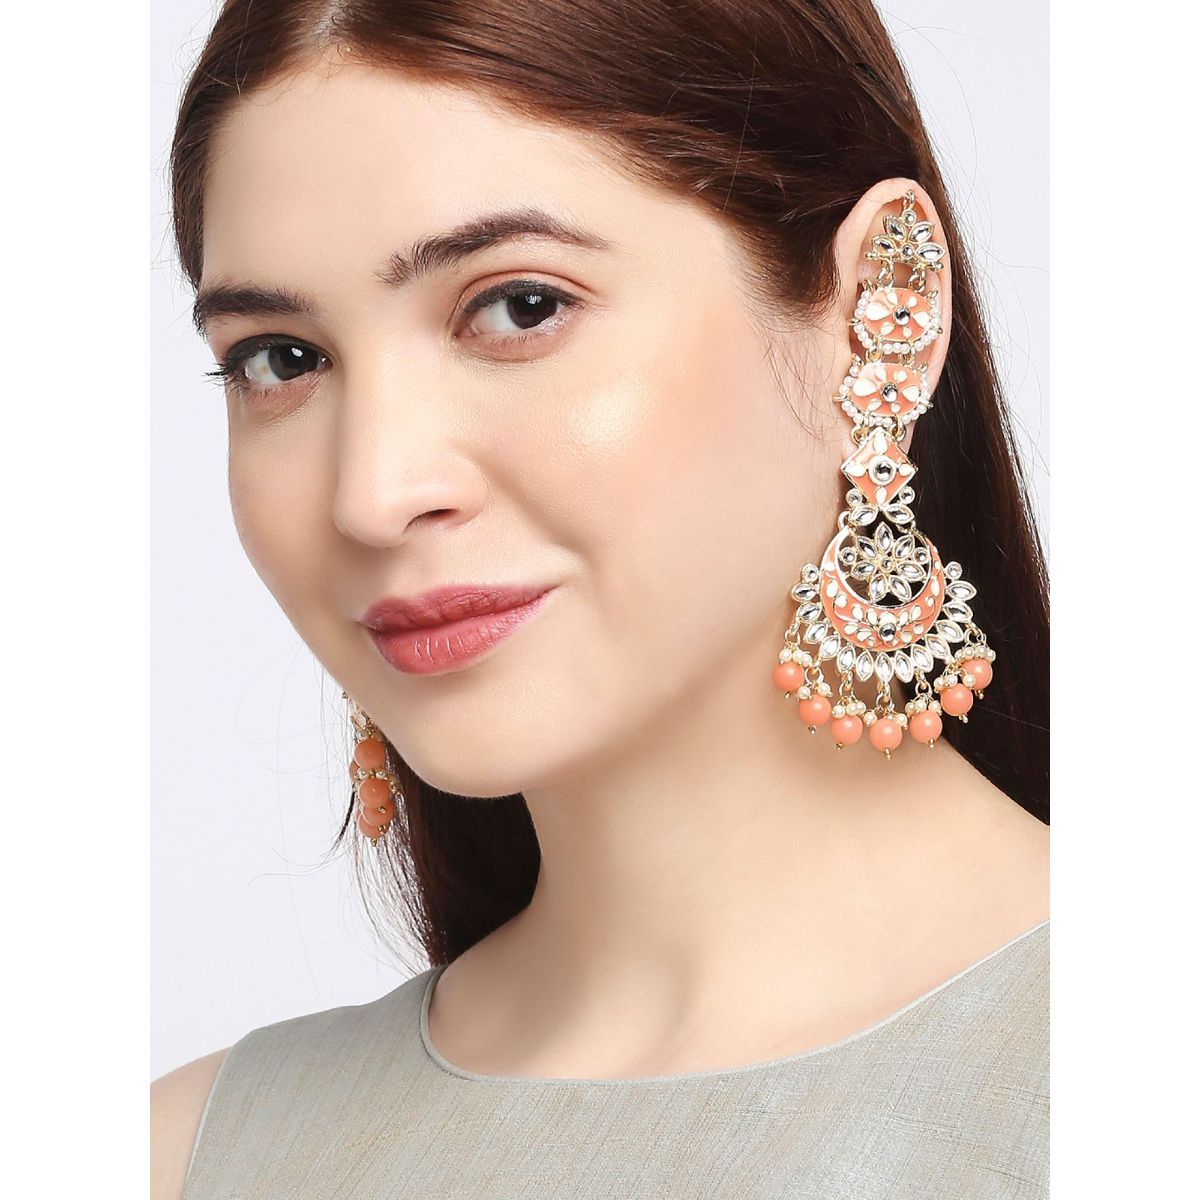 Buy Kundan Big Jhumka Style Earrings Jewelry Set Pearls Online in India   Etsy  Indian bridal jewelry sets Indian earrings Indian jewelry earrings